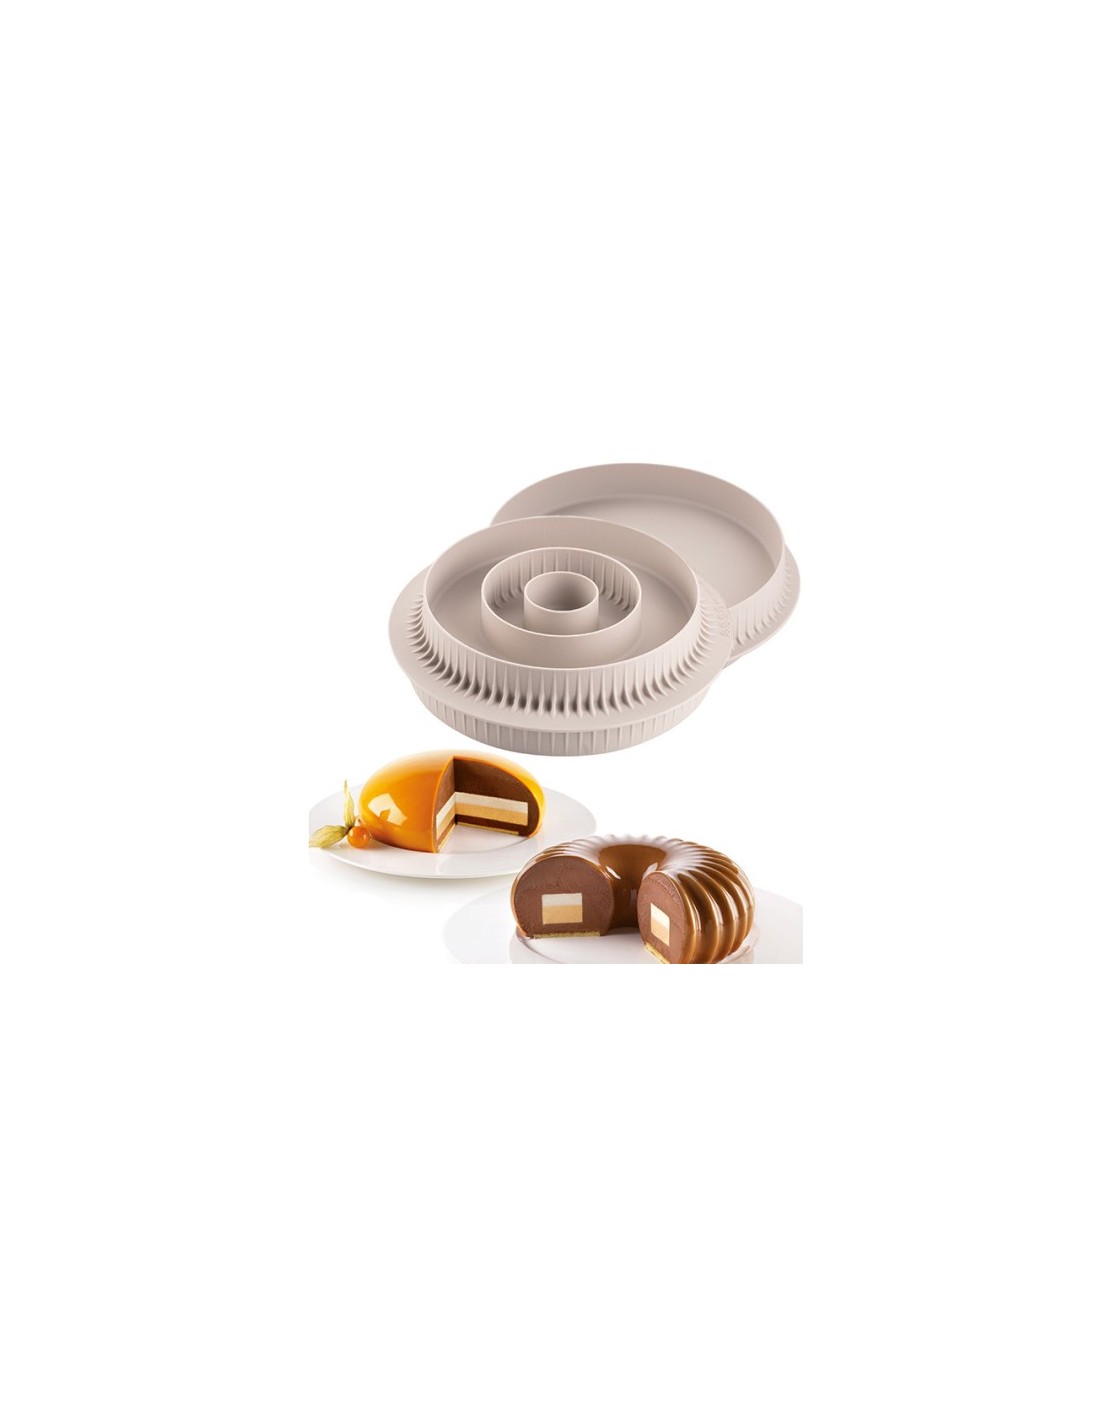 Multi-Inserto Round - Les inserts ronds en silicone - Pâtisserie - Parlapapa